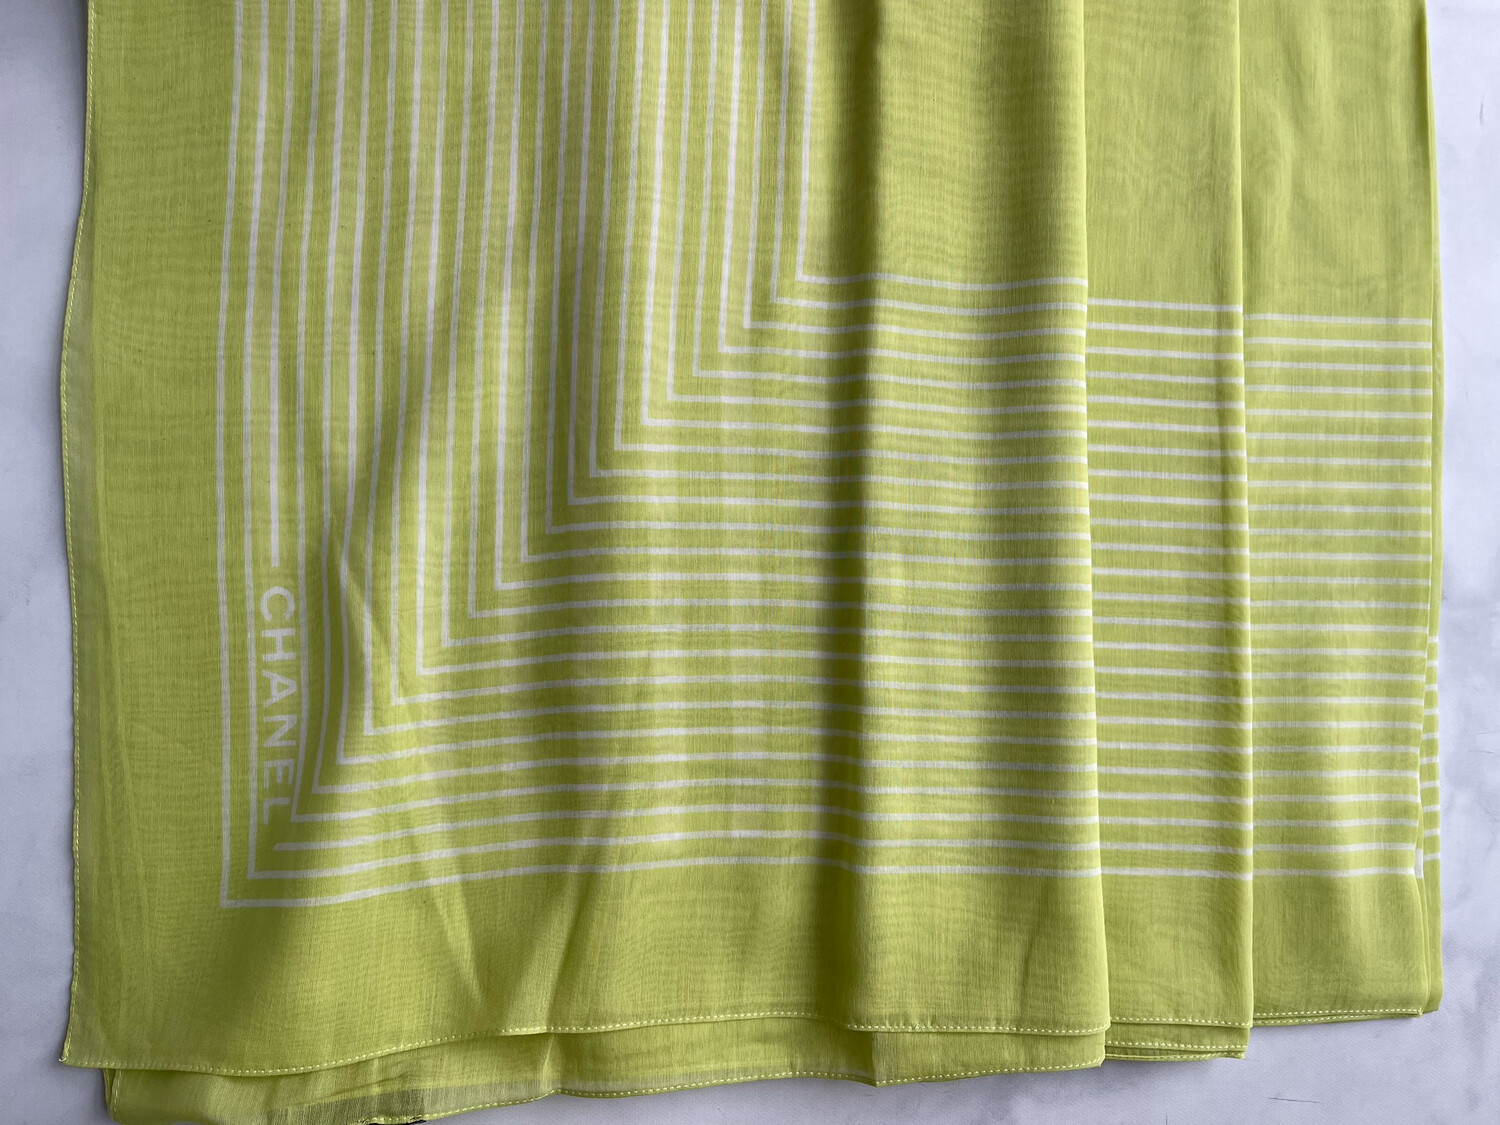 Chanel Scarf Lightweight Silk And Cotton, Green, New - No Box - Light Blemish